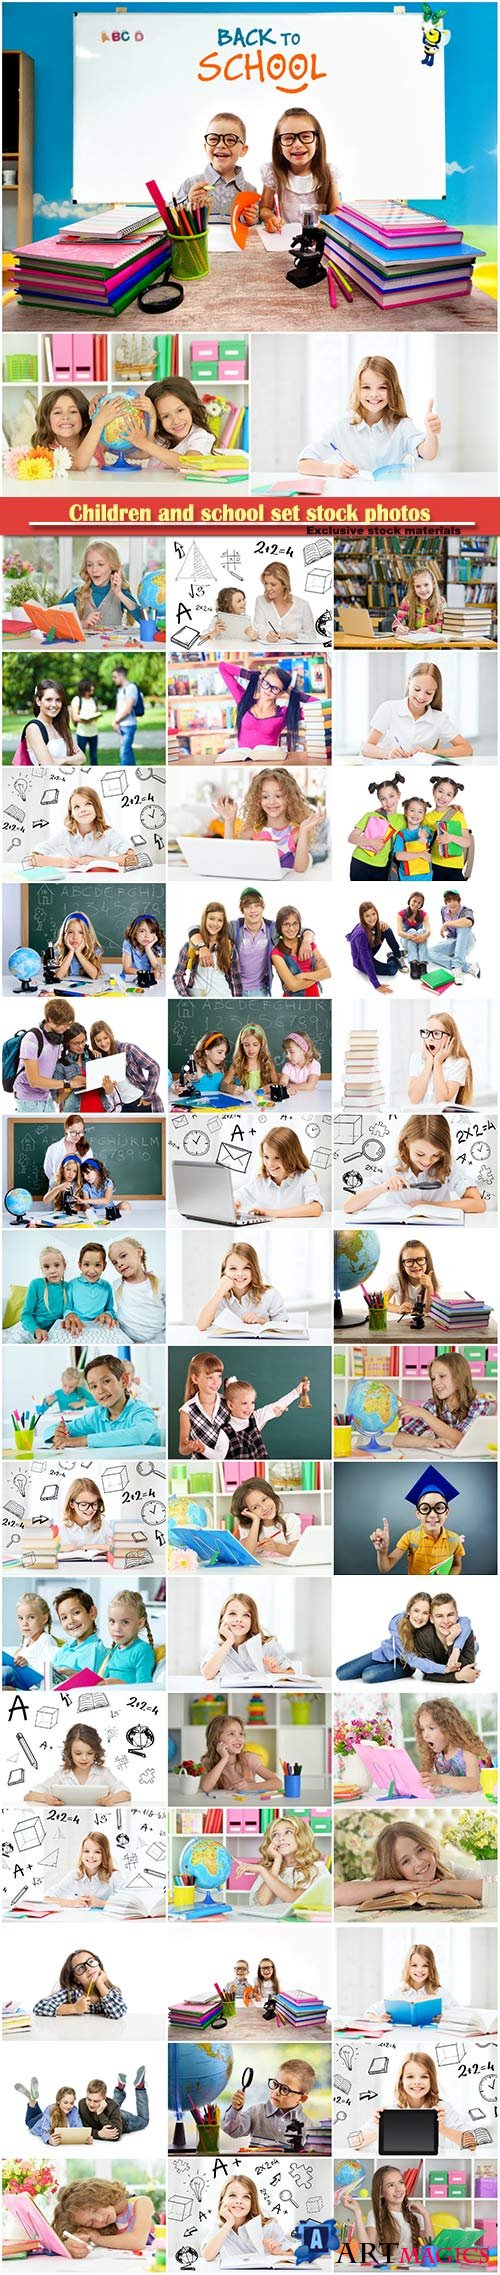 Children and school set stock photos # 3